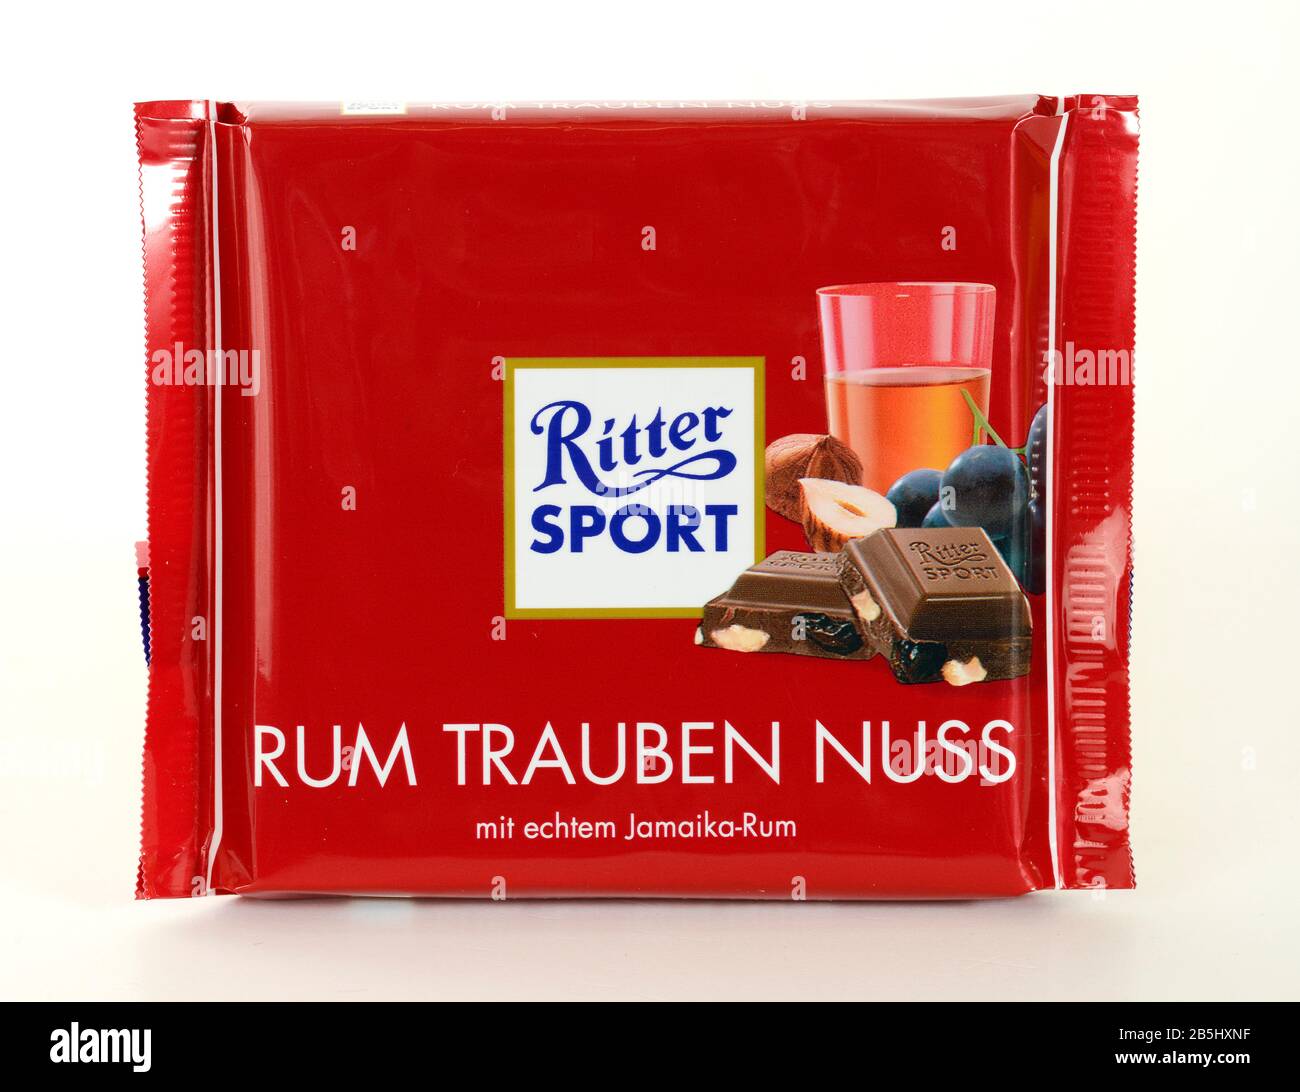 Schokoladentafel, Rum Trauben Nuss, Ritter Sport Stock Photo